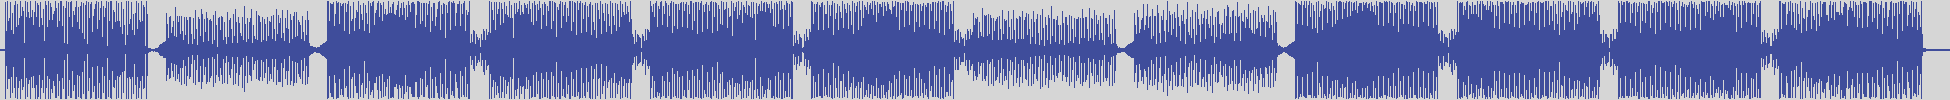 nf_boyz_records [NFY009] Project 111 - Brasilisn [Aesthetic Mix] audio wave form